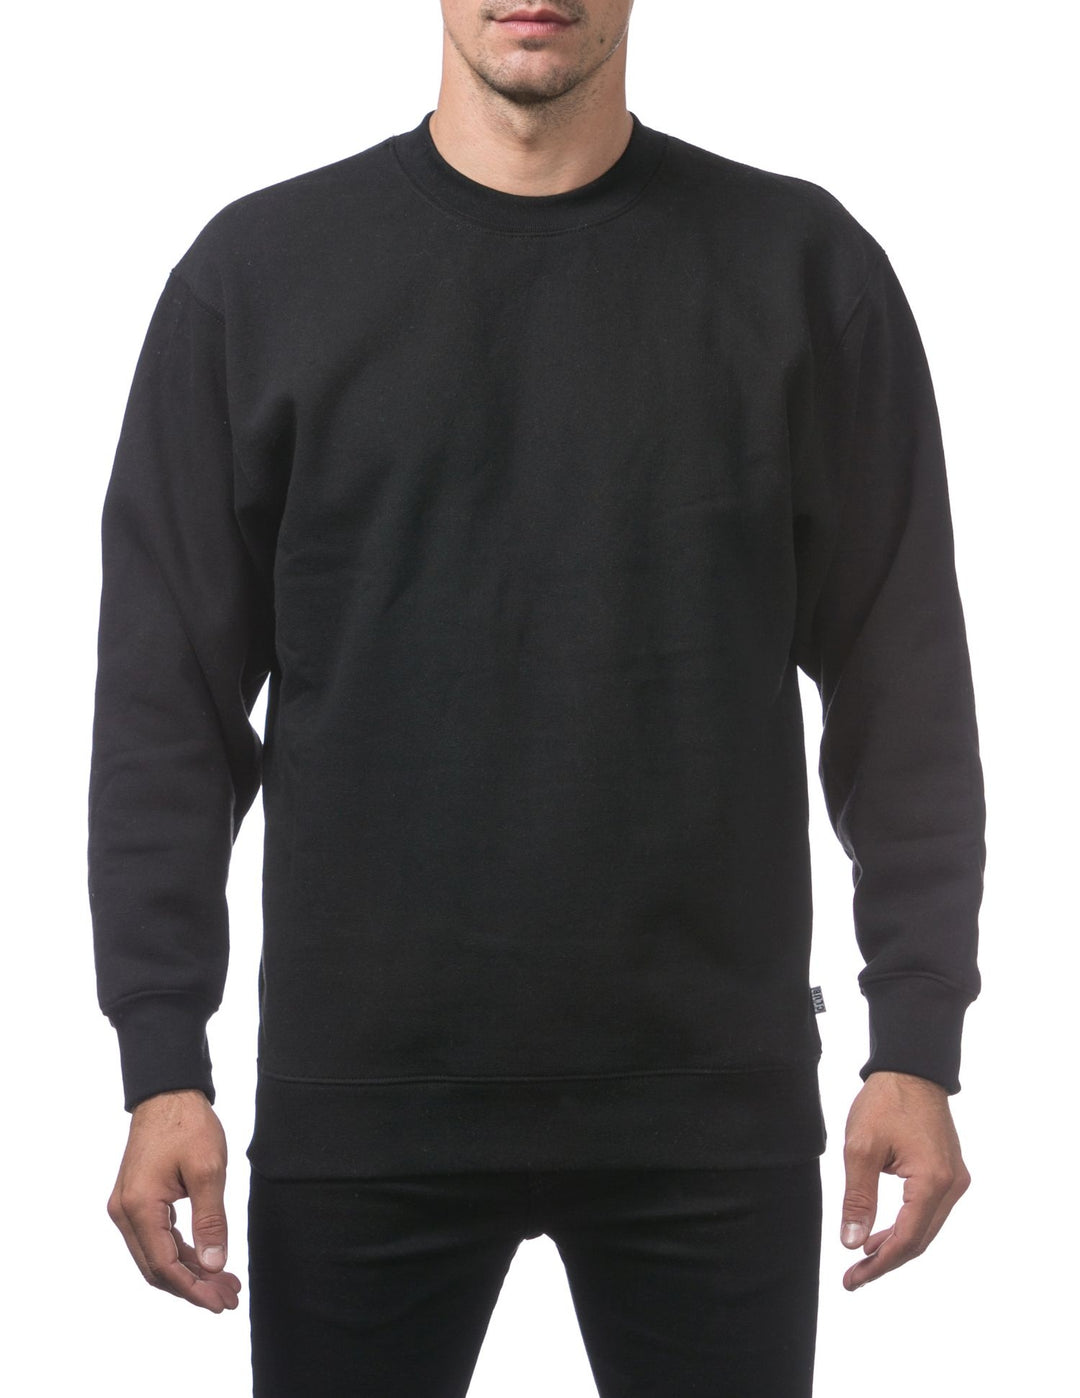 Pro Club Men's Plain Blank Crew Neck Fleece Pullover Sweater (9oz) Black